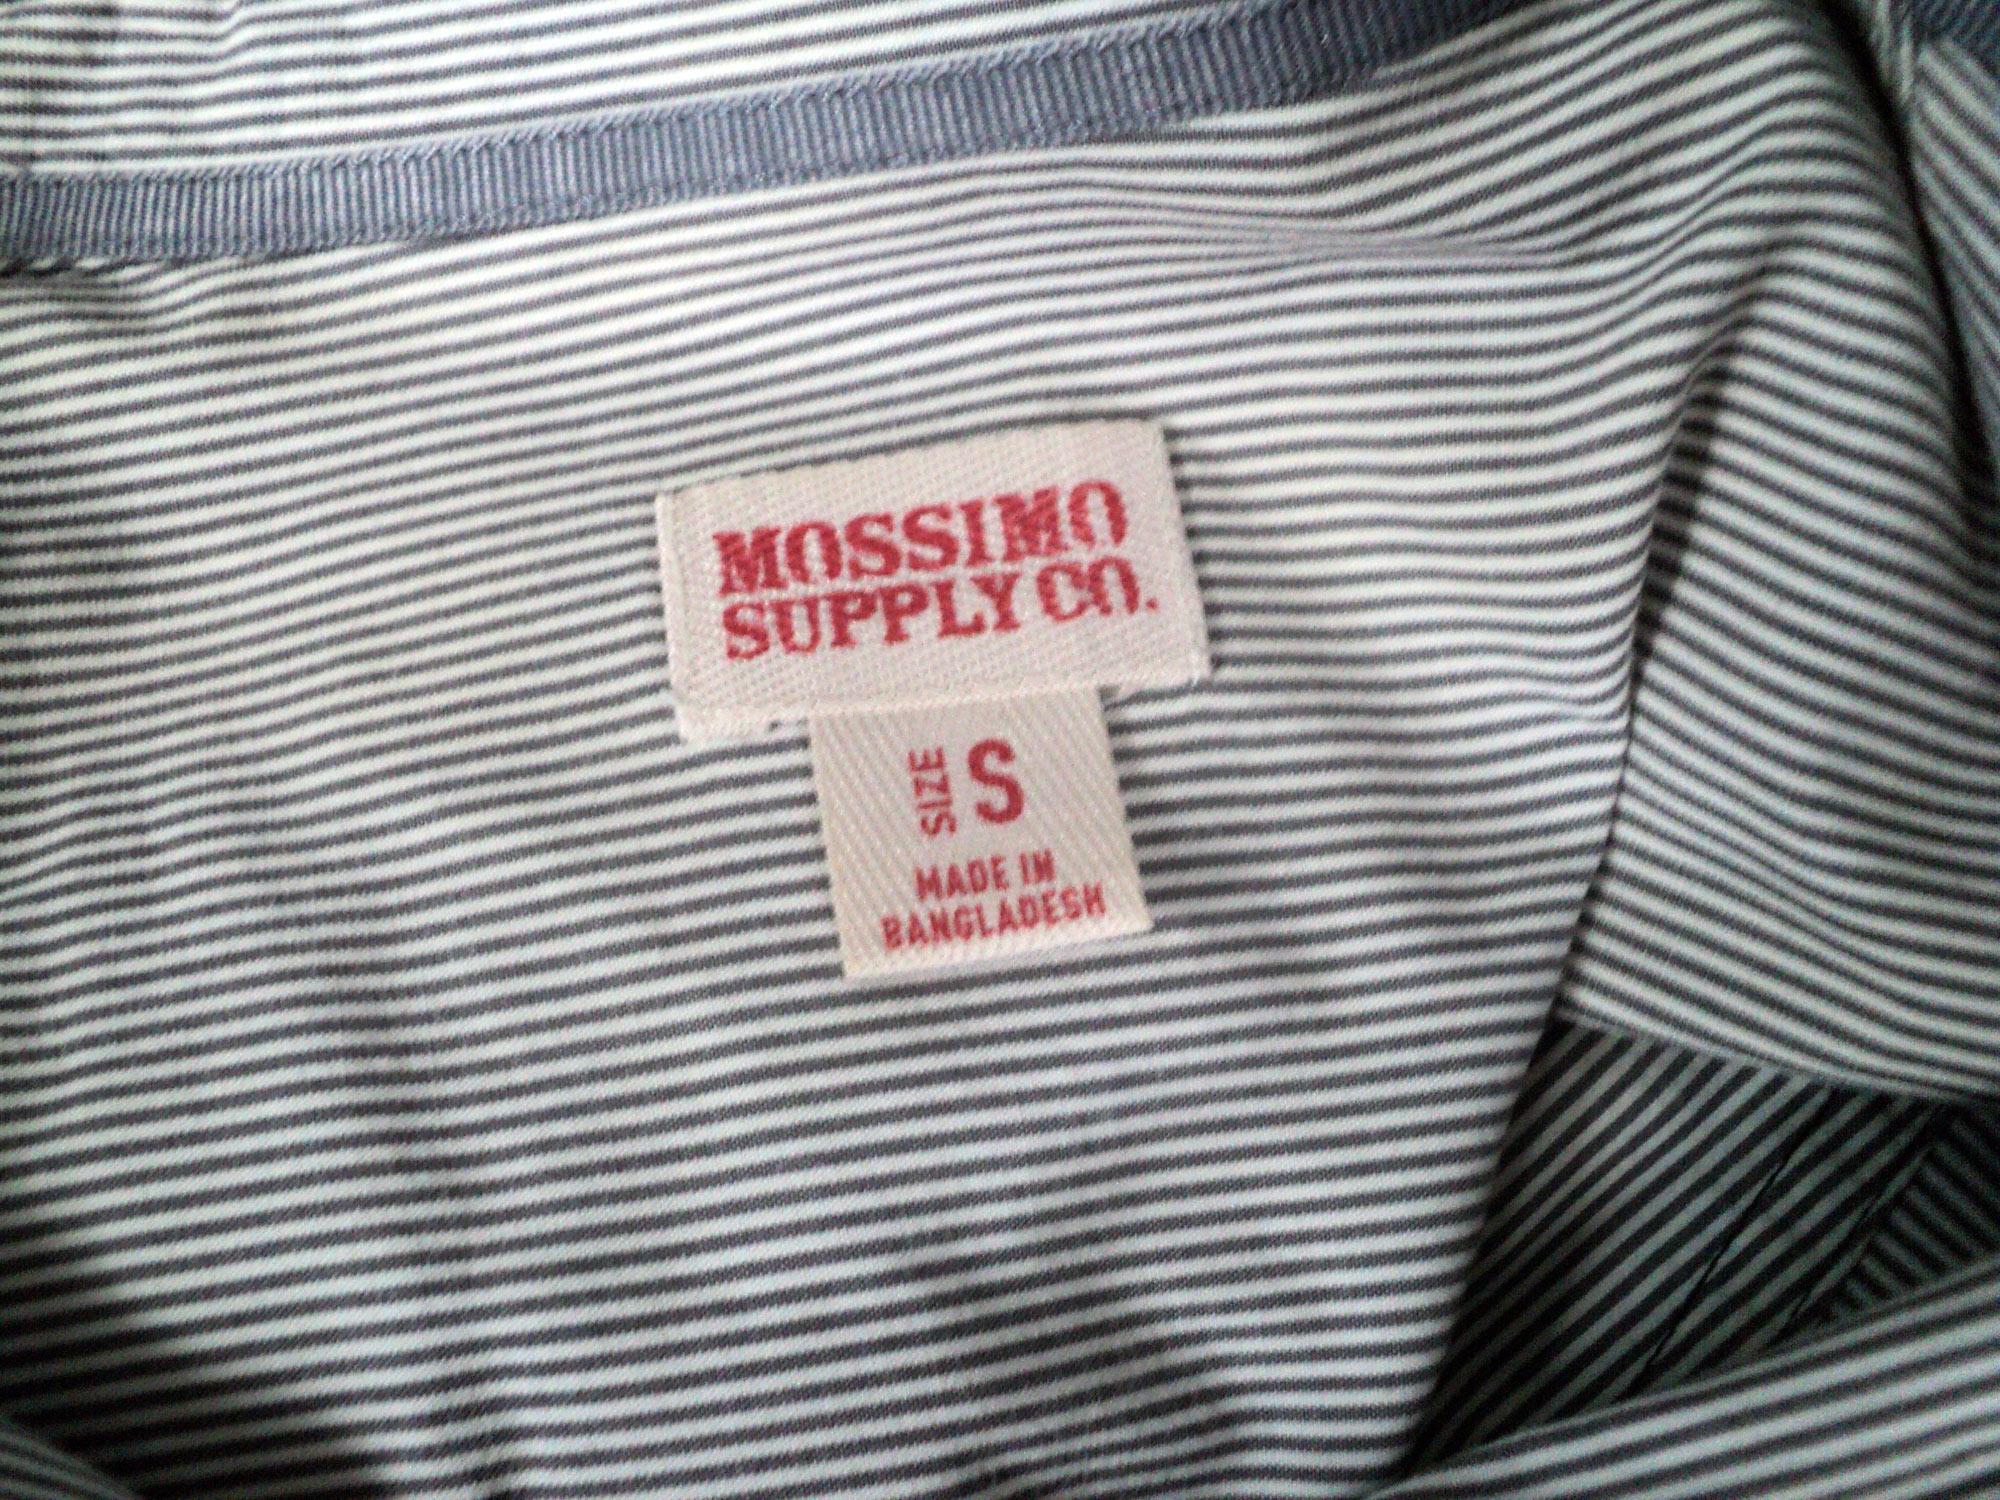 Mossimo, supply, co, s, shirt, 1